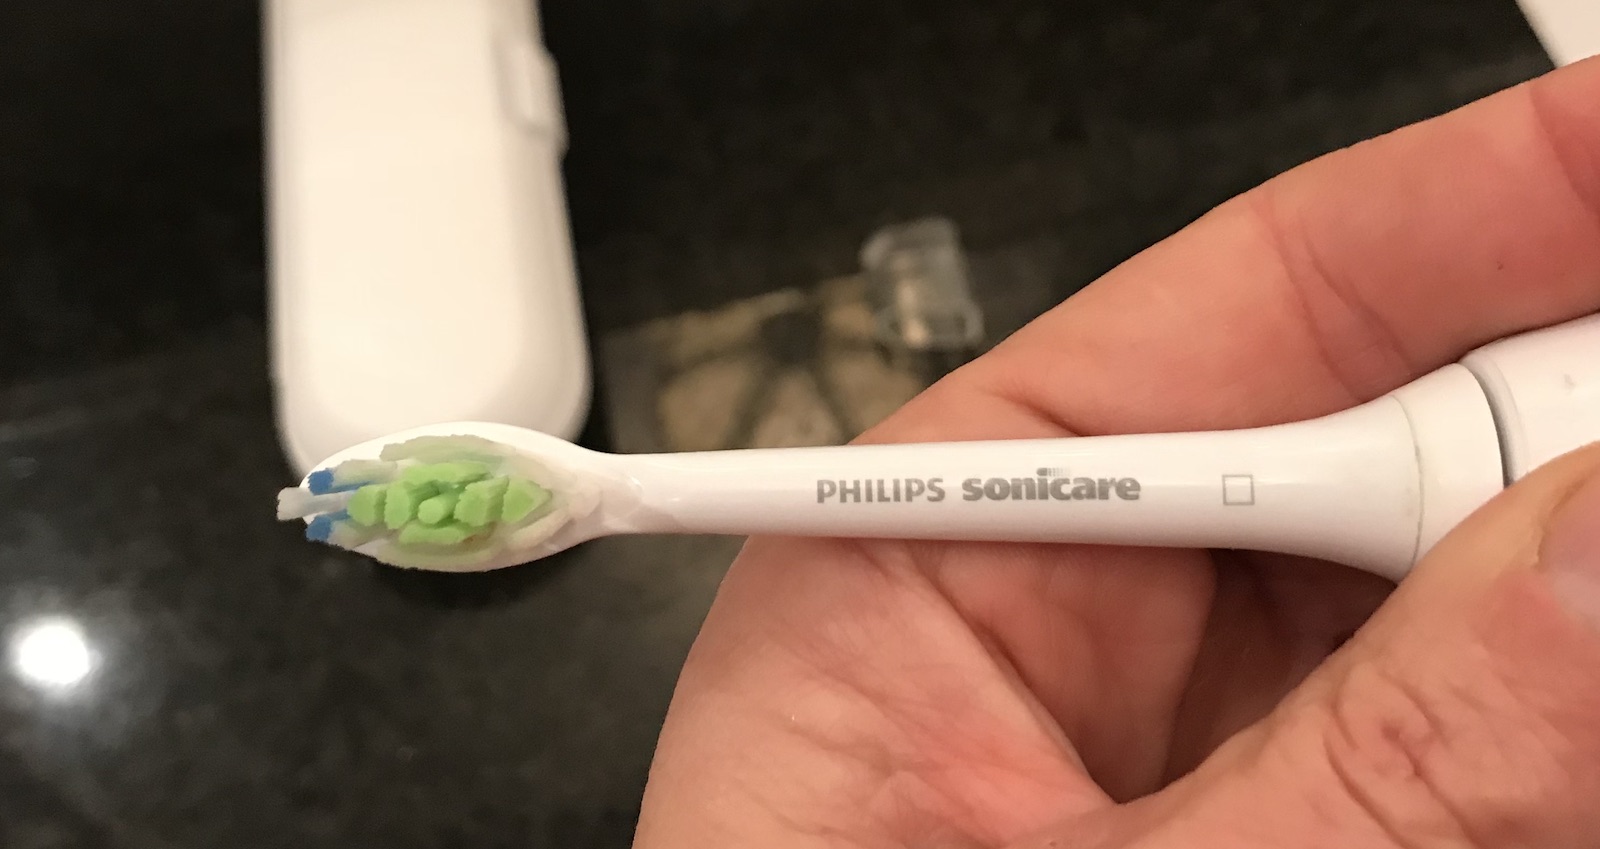 Philips HealthyWhite Sonic toothbrush